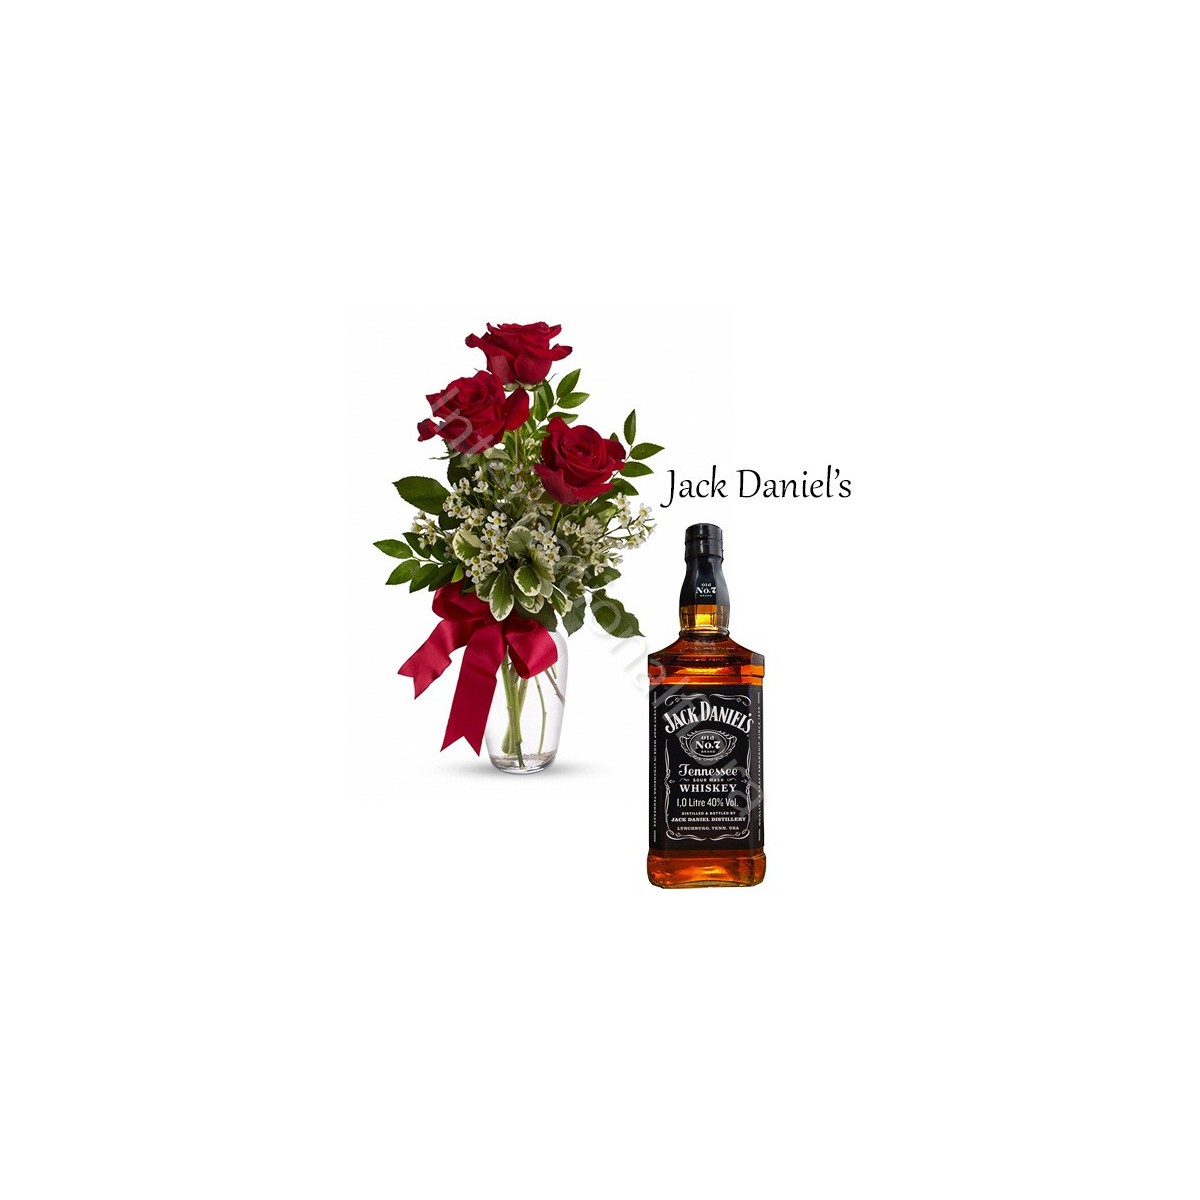 Bottiglia di Jack Daniel’s con Bouquet di 3 Rose rosse